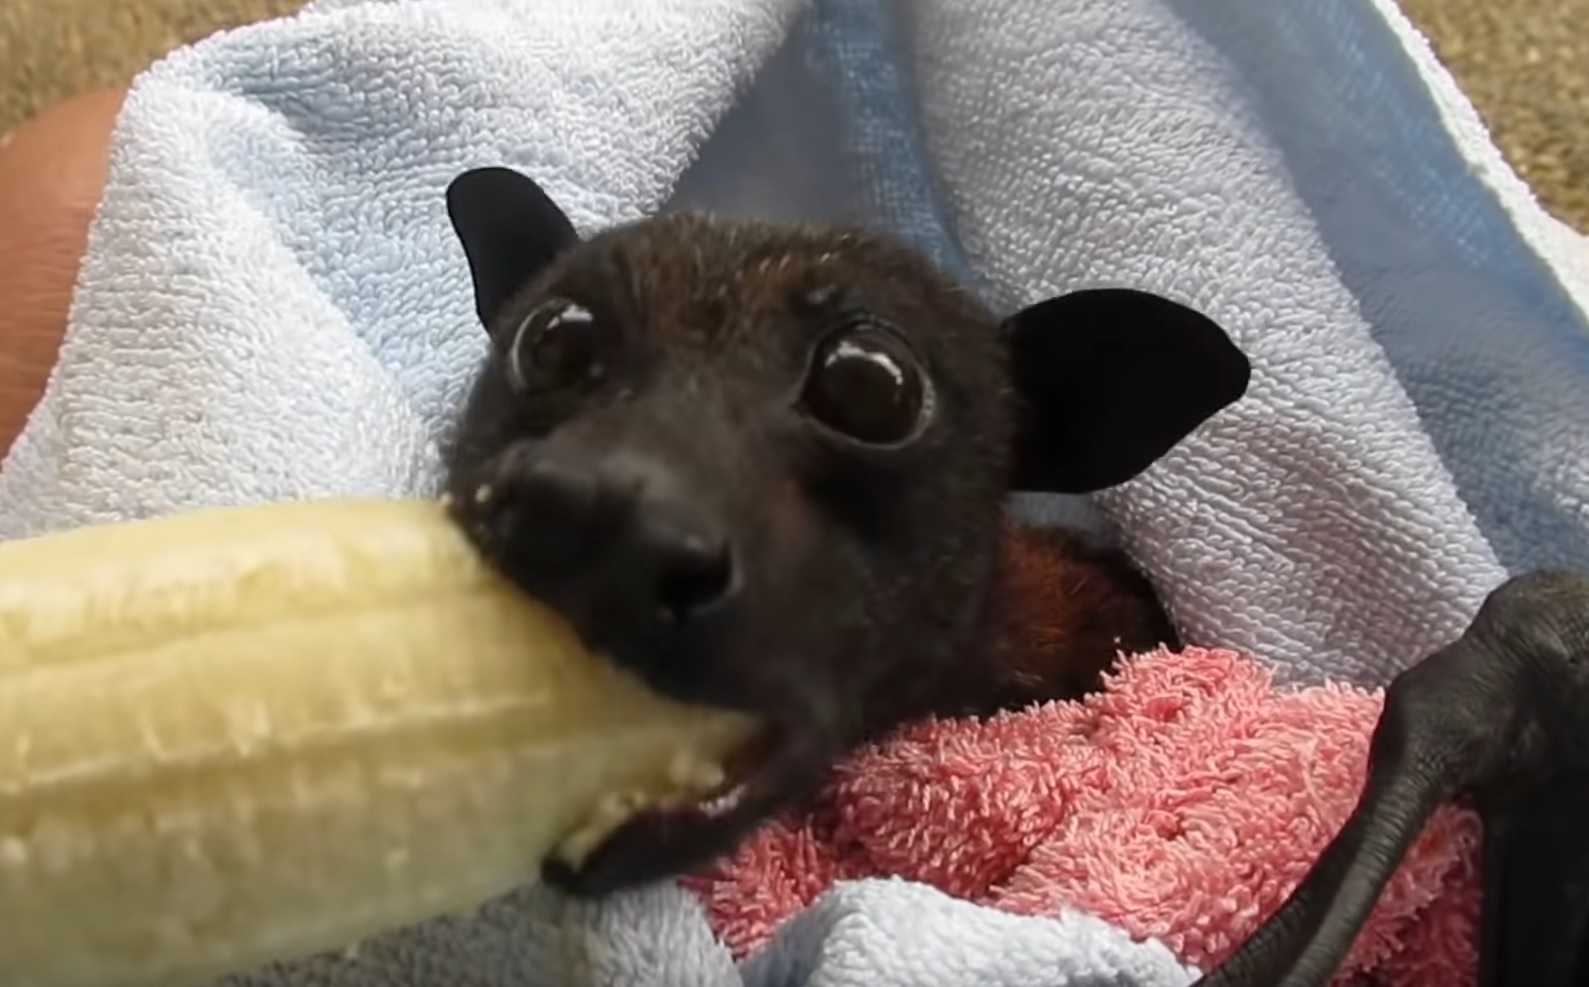 Rescue Bat Enjoys Banana